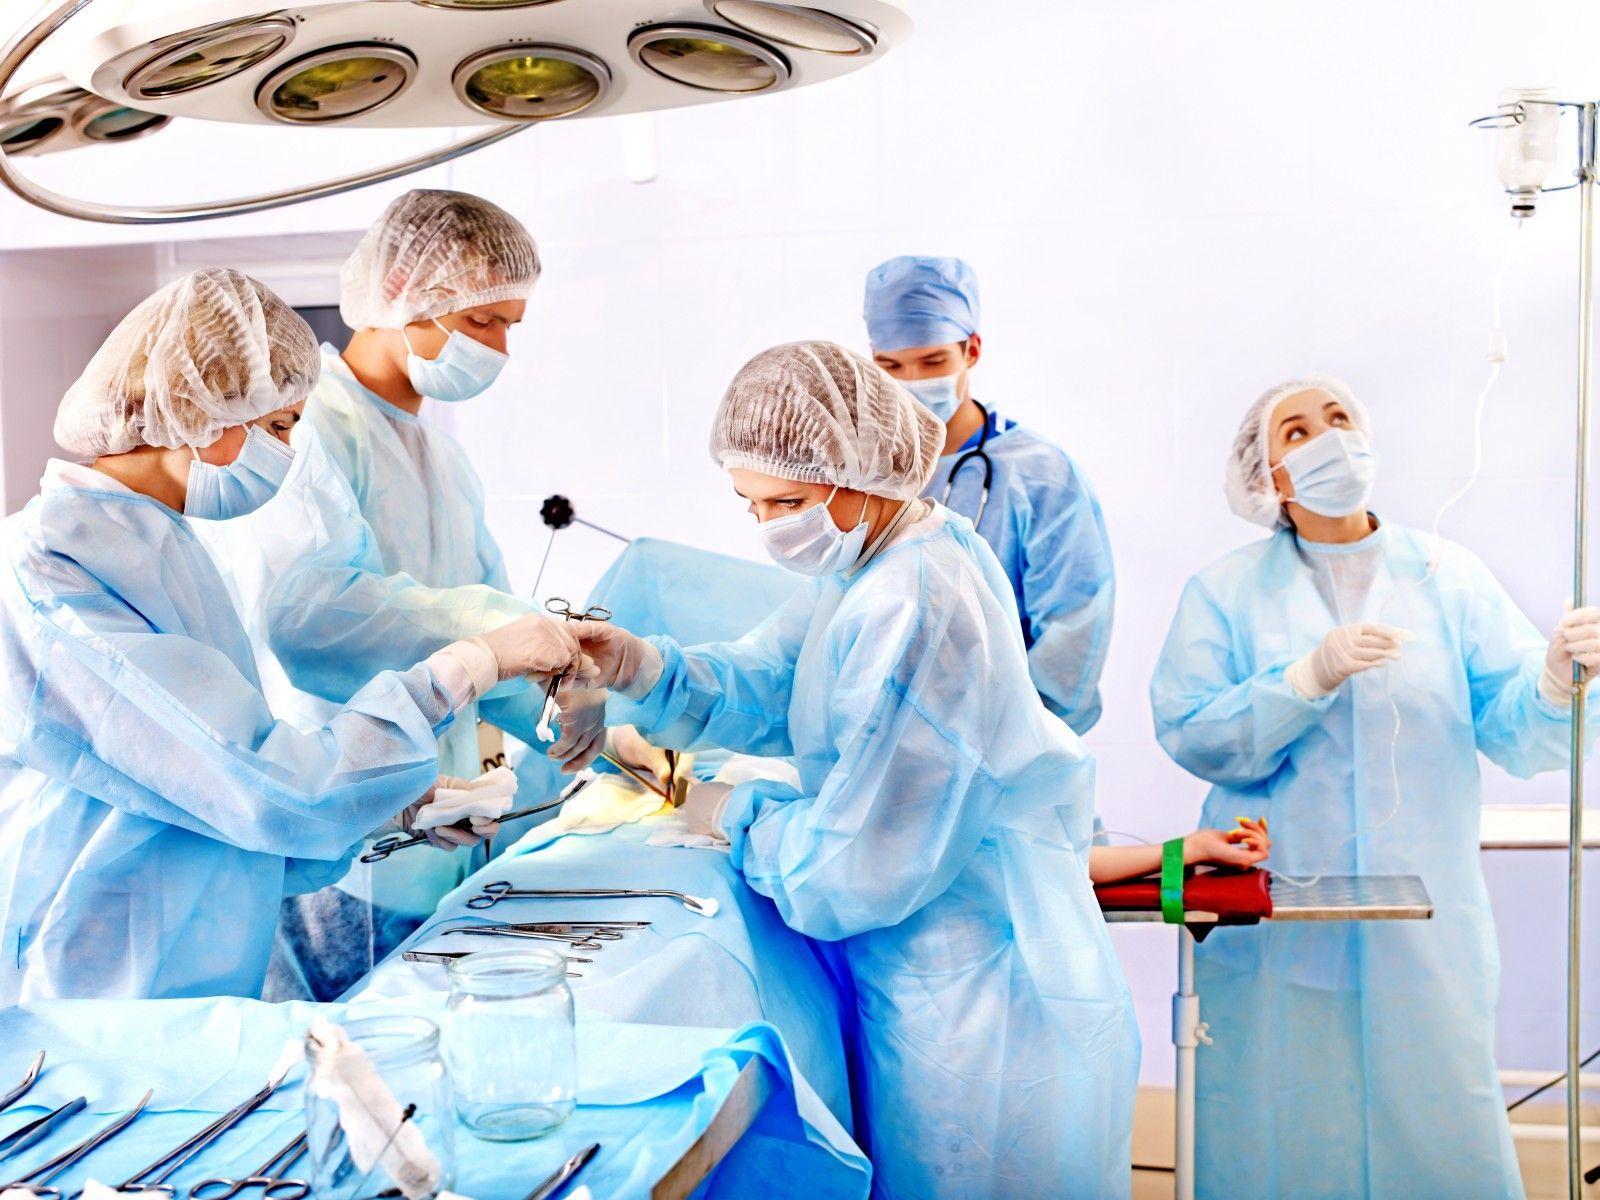 Surgery, Surgeon Team PHOTOS • Elsoar